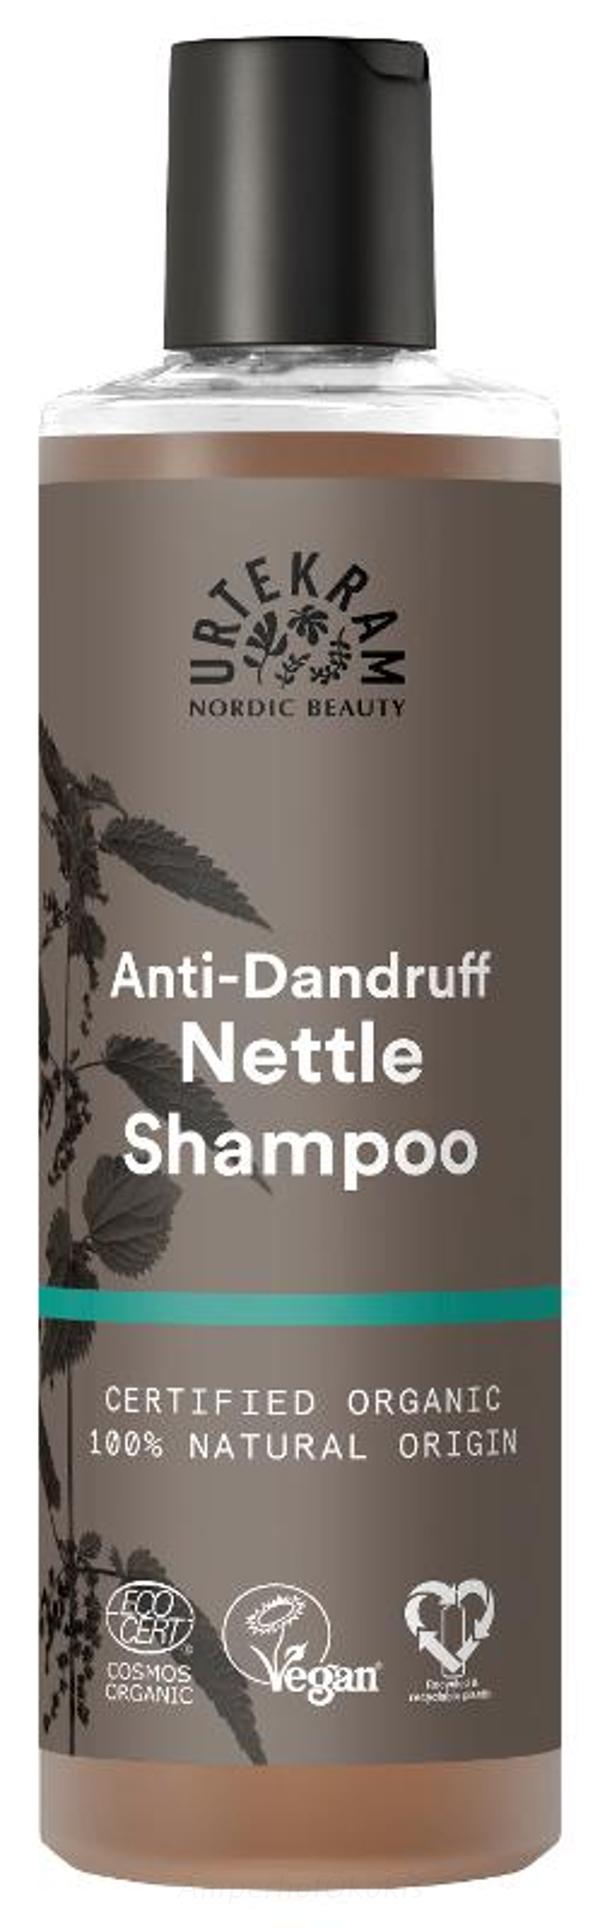 Produktfoto zu Shampoo Nettle 250 g